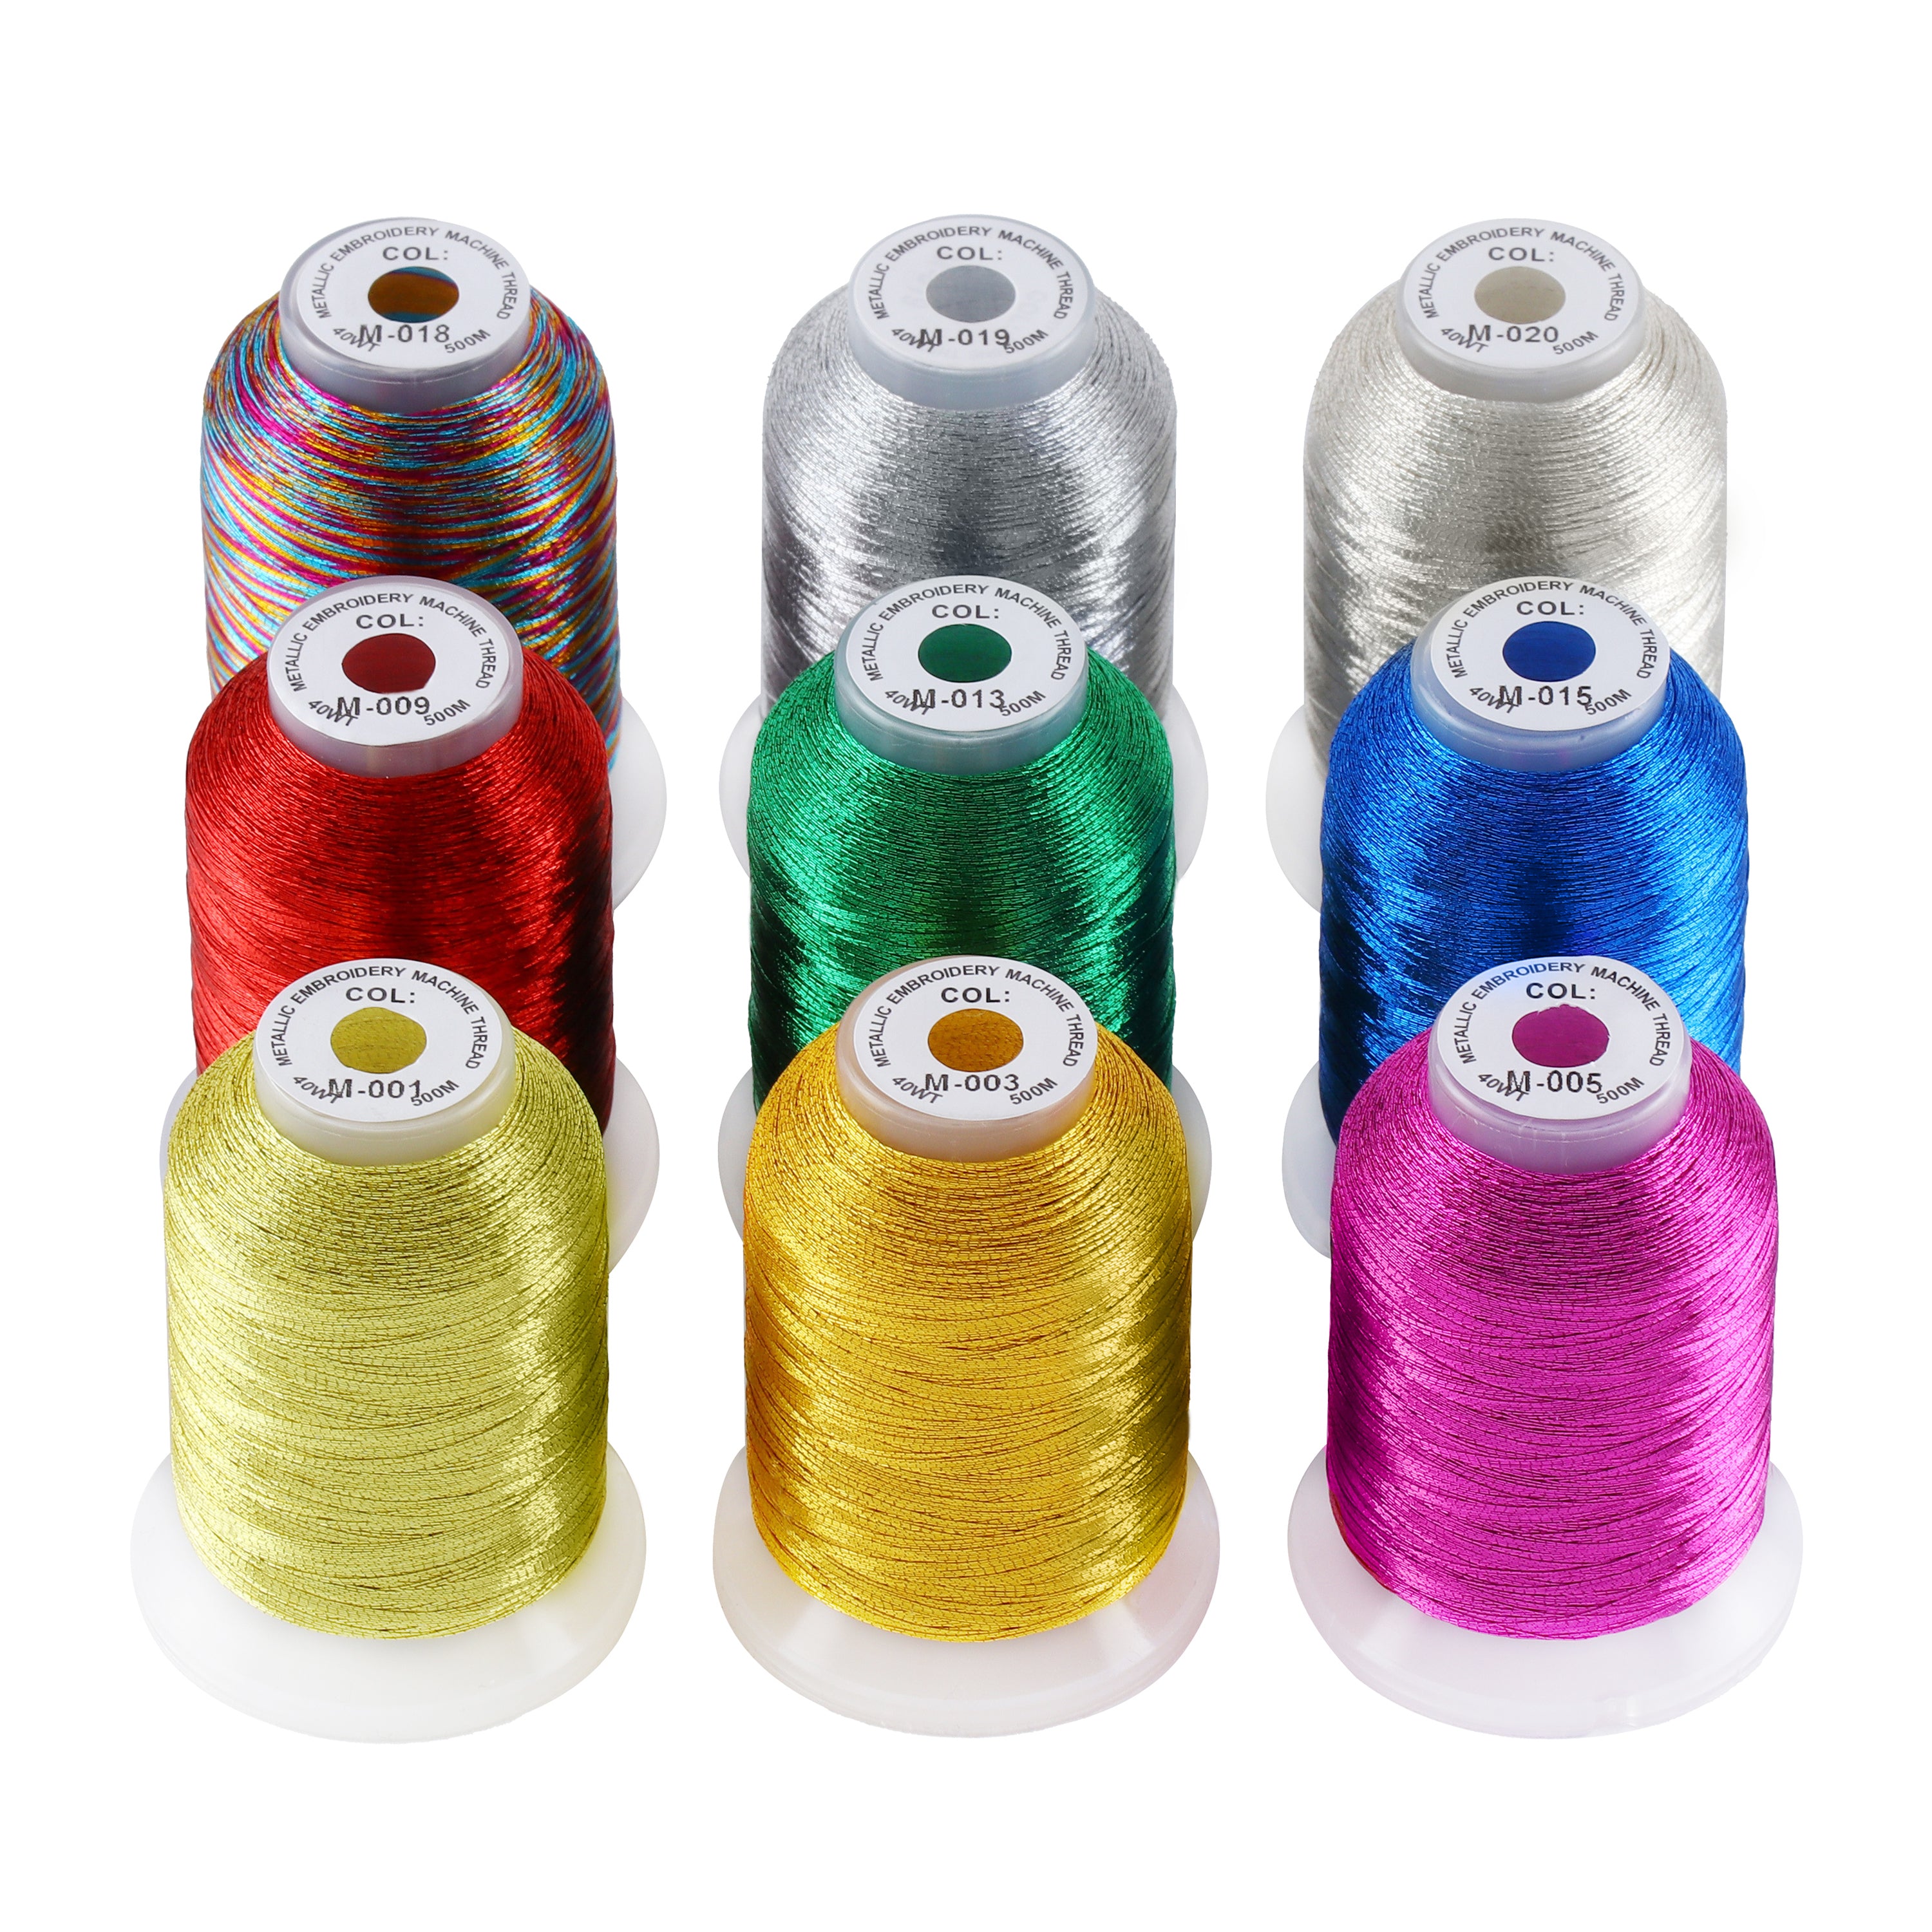 New Brothread 9 Basic Colors Metallic Embroidery Machine Thread Kit 50